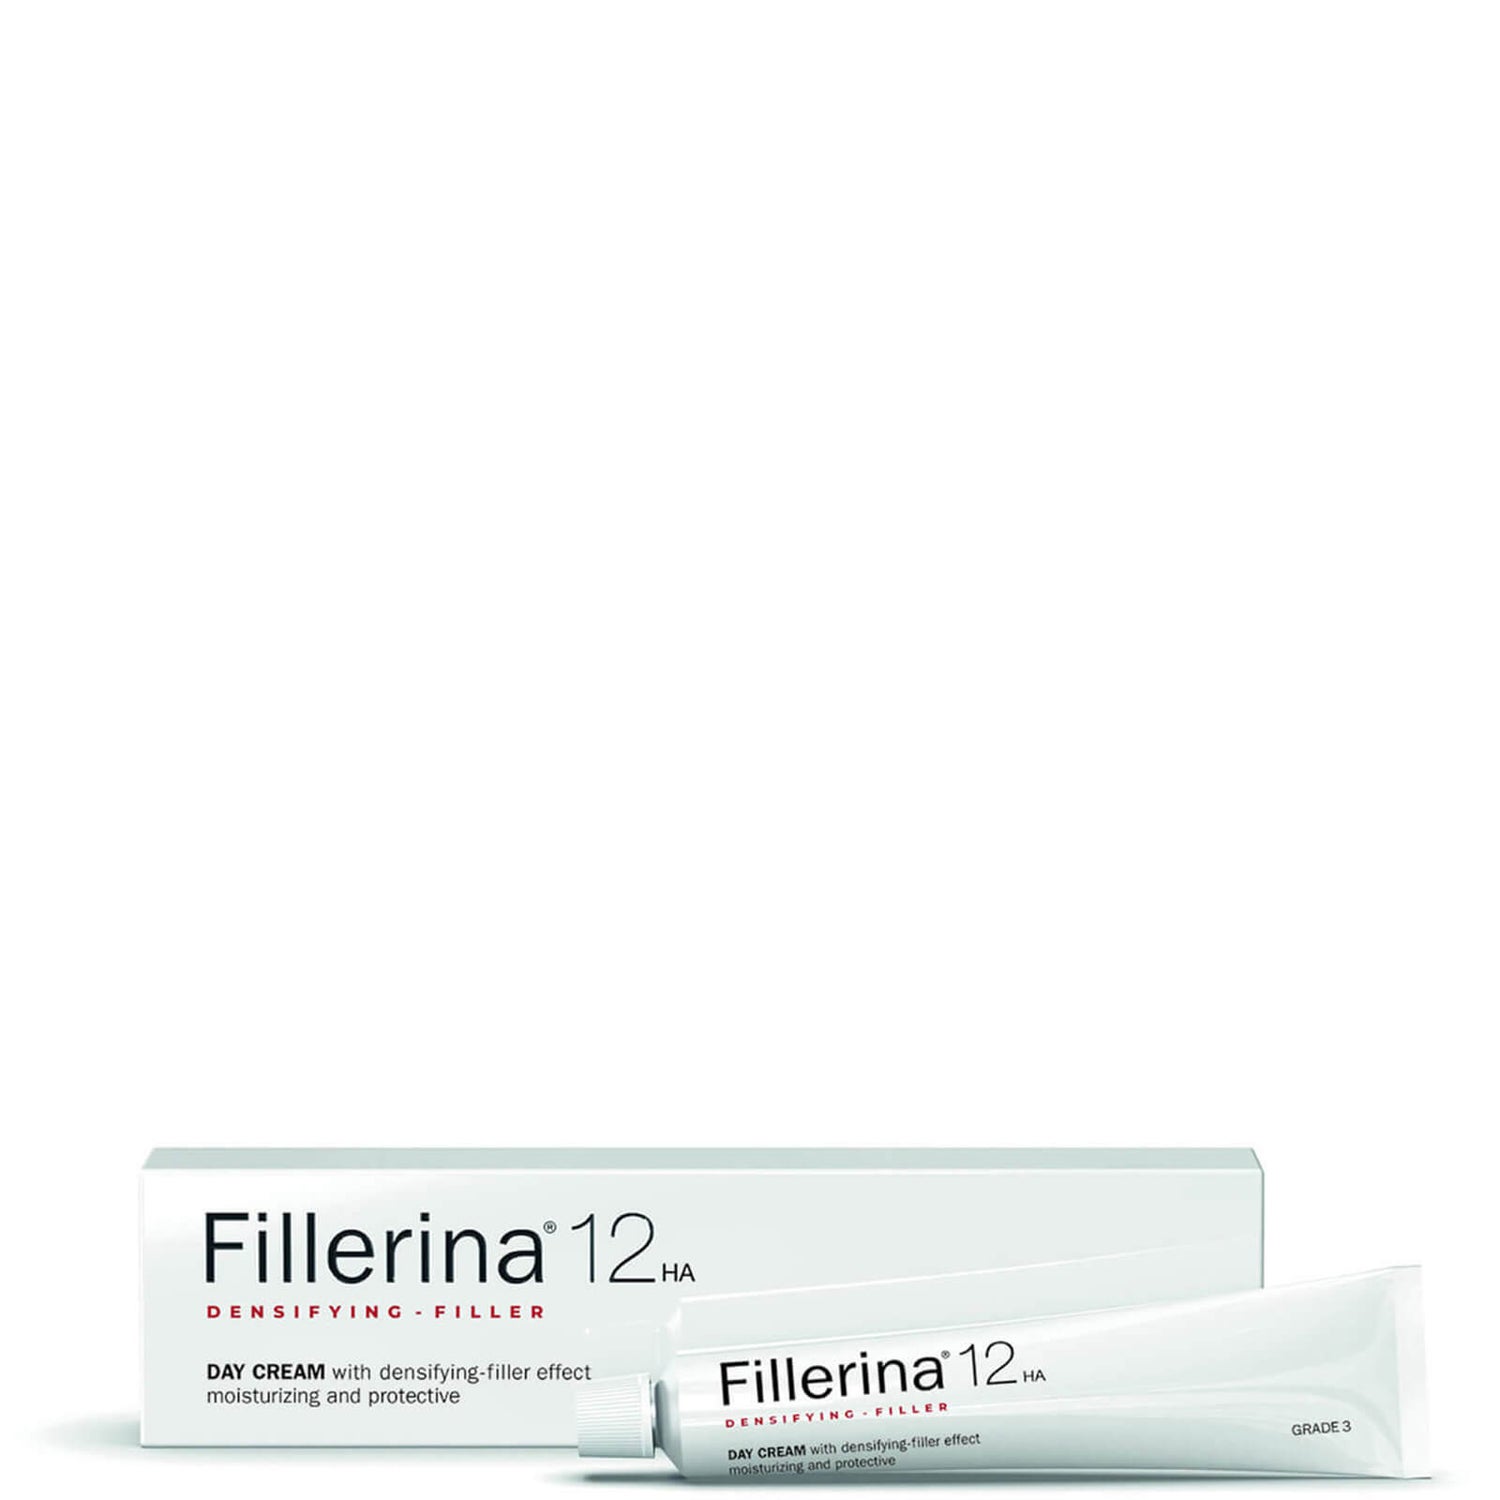 Fillerina 12 Densifying-Filler Day Cream - Grade 3 50ml